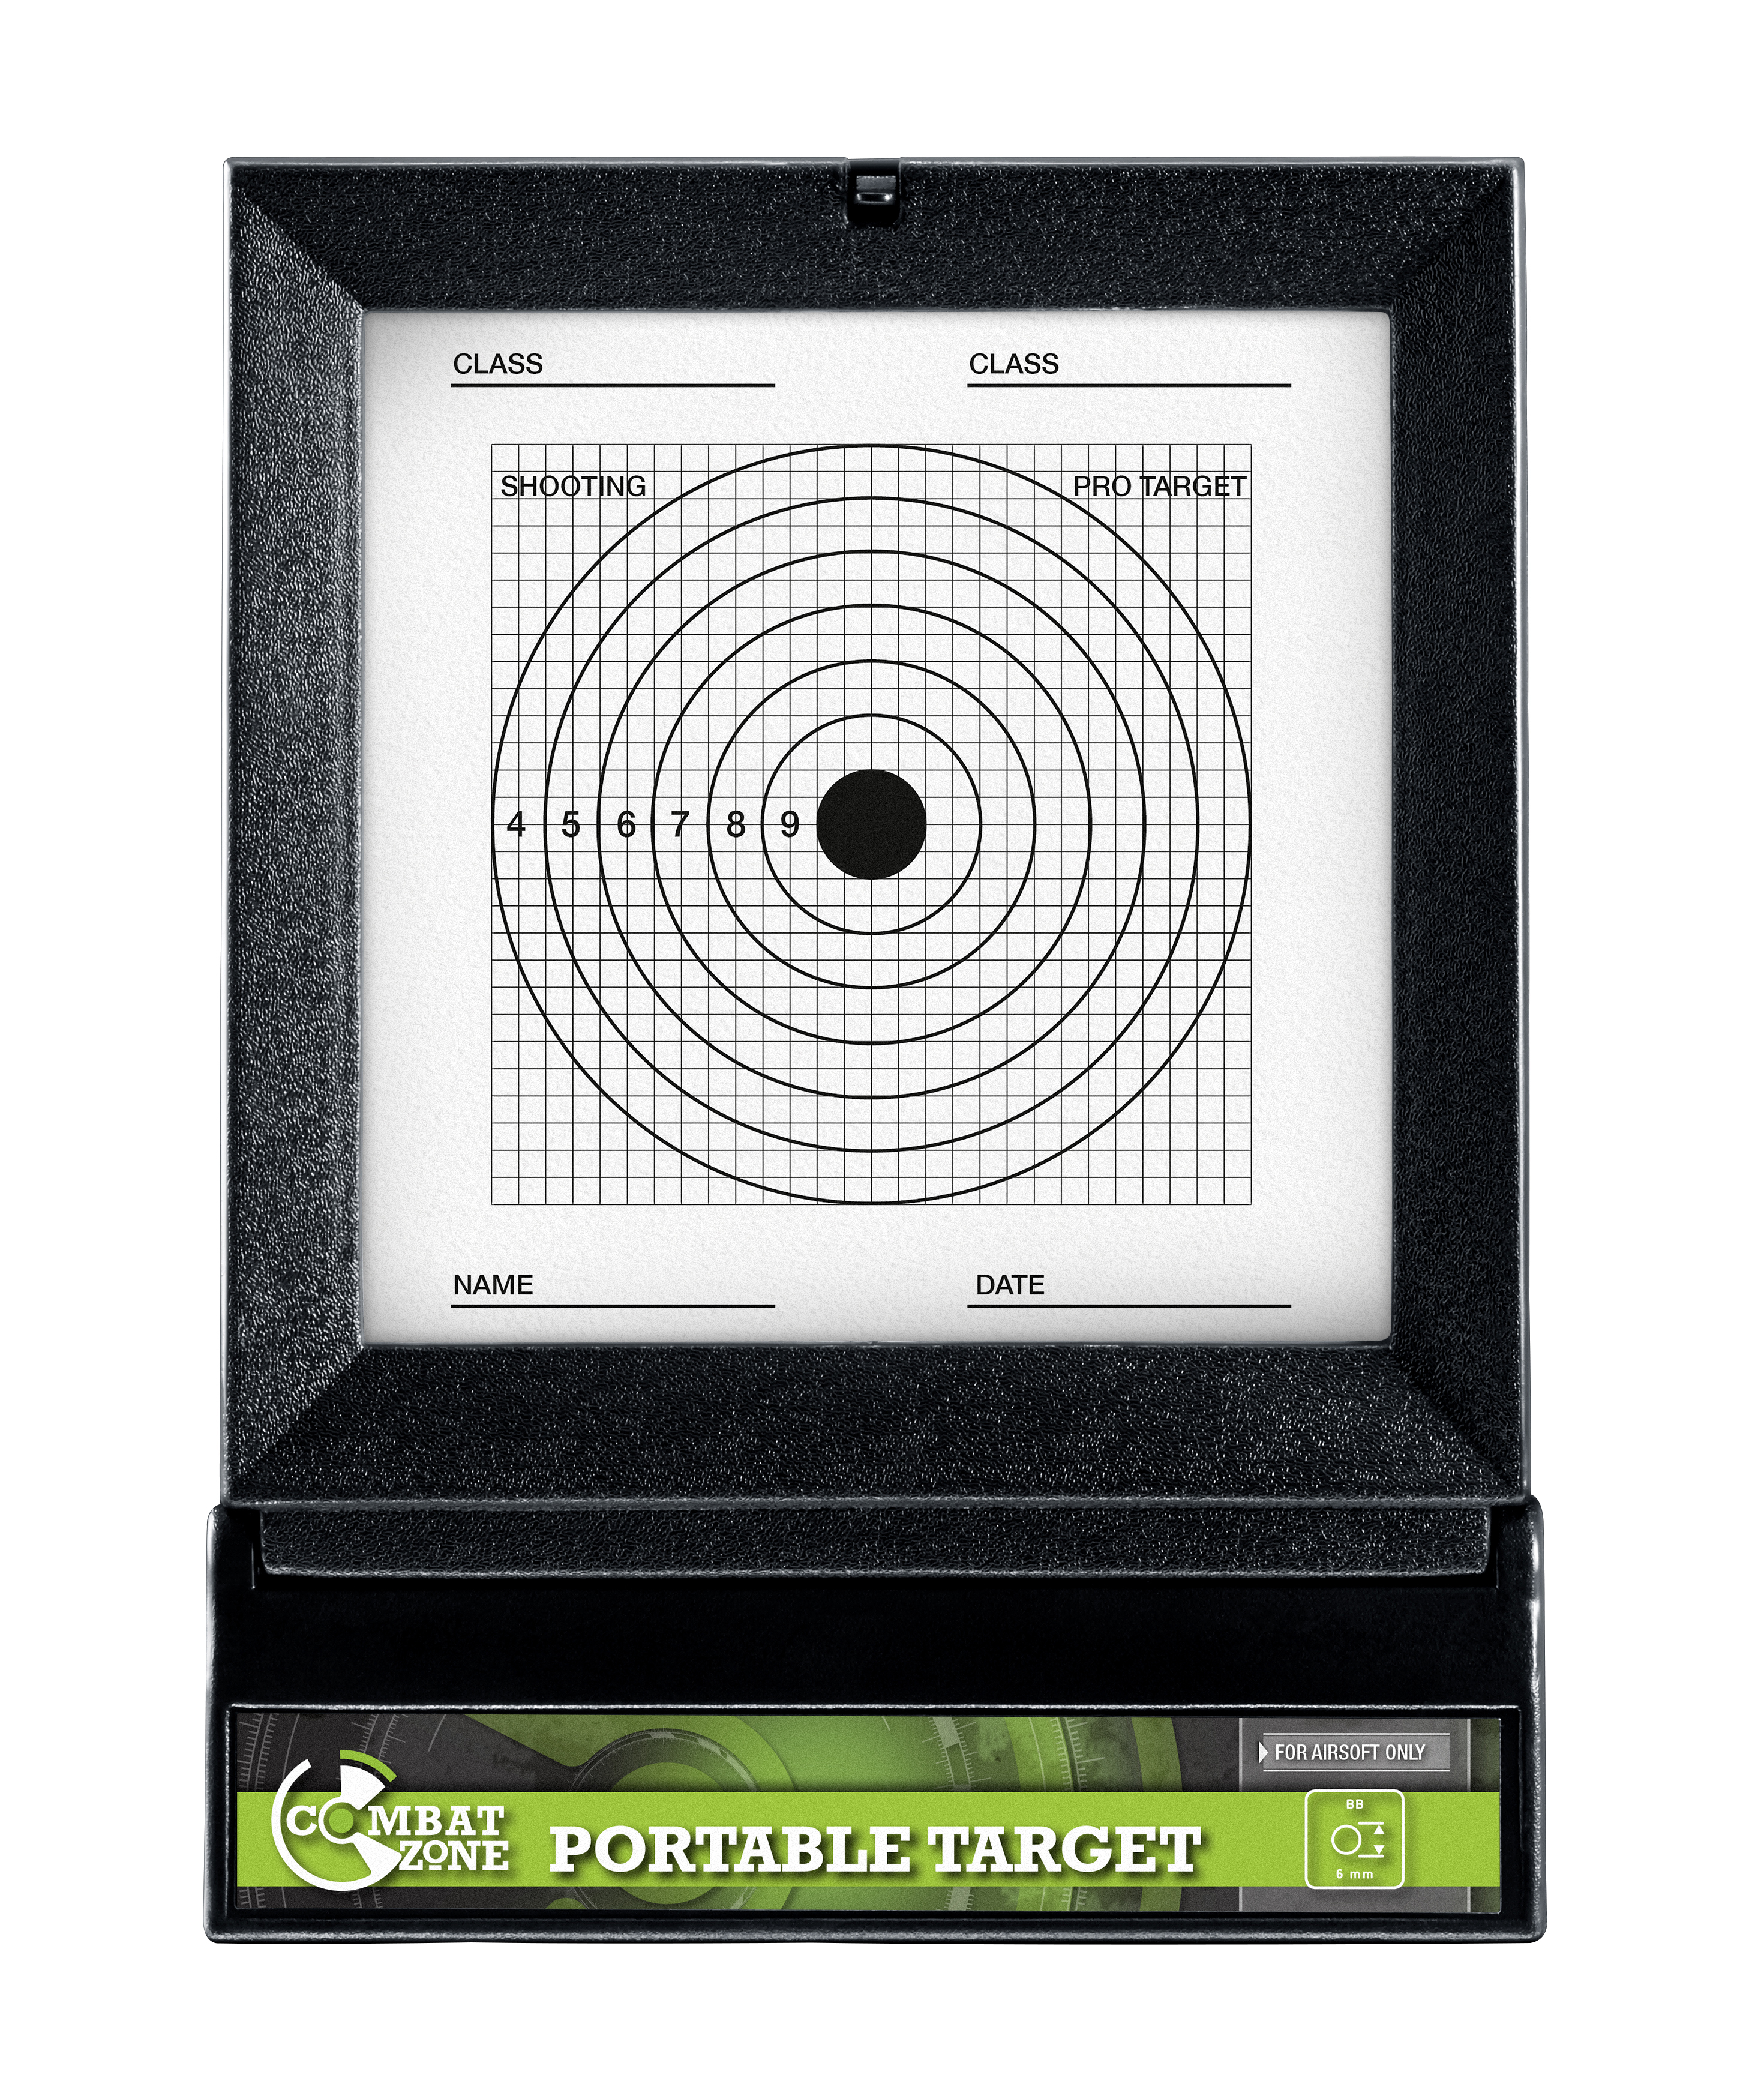 COMBAT ZONE (Umarex) Portable Target